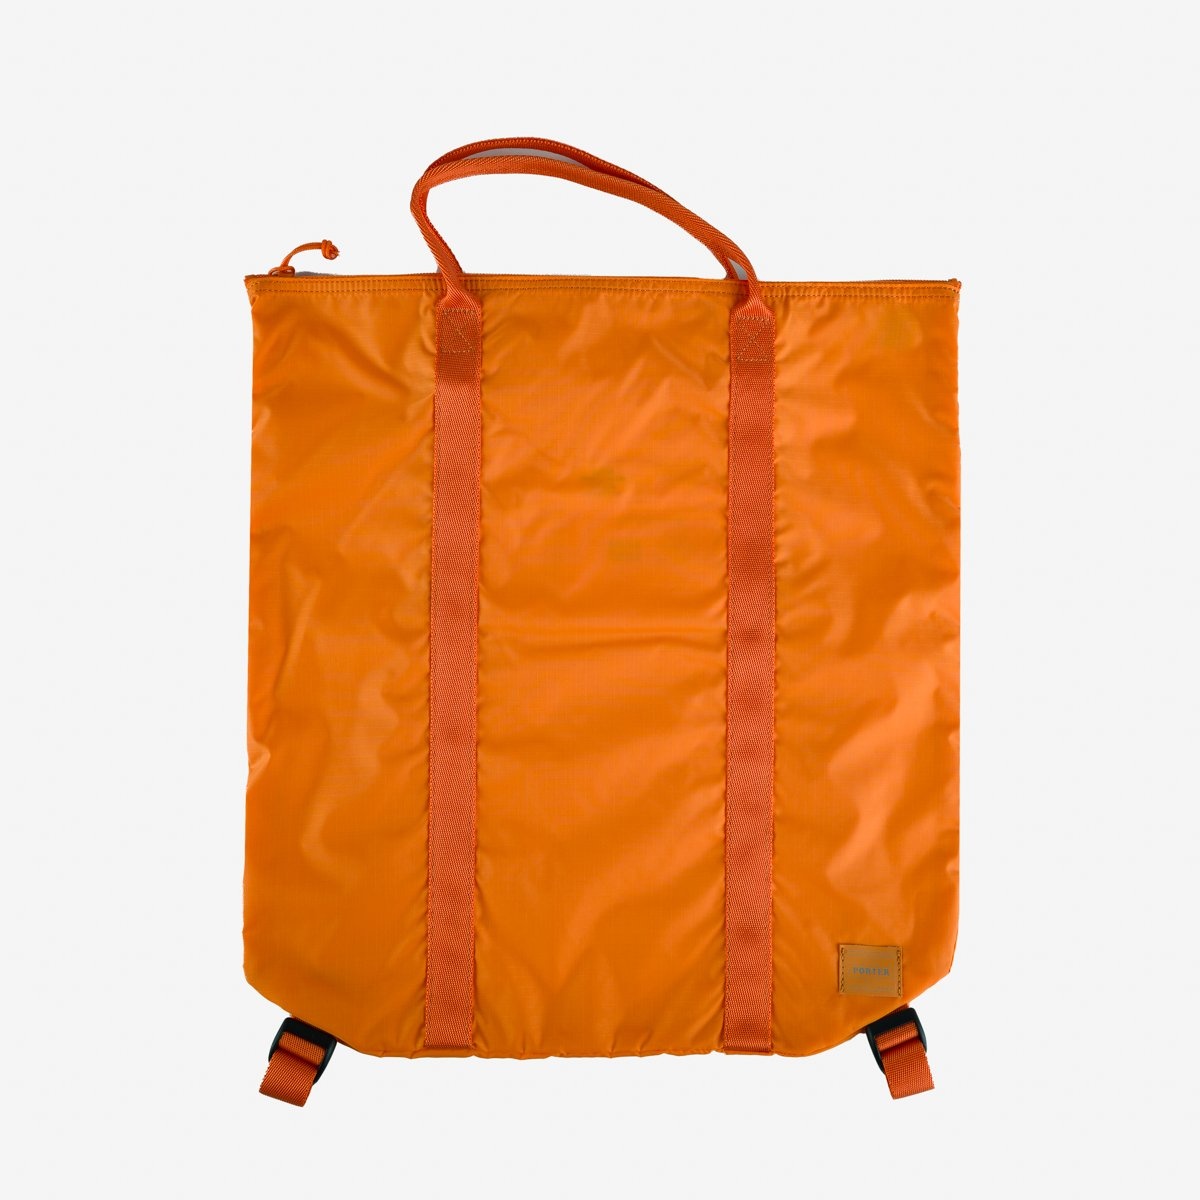 POR-FLEX-TOTE-ORA Porter - Yoshida & Co. - Flex 2Way Tote Bag - Orange - 1